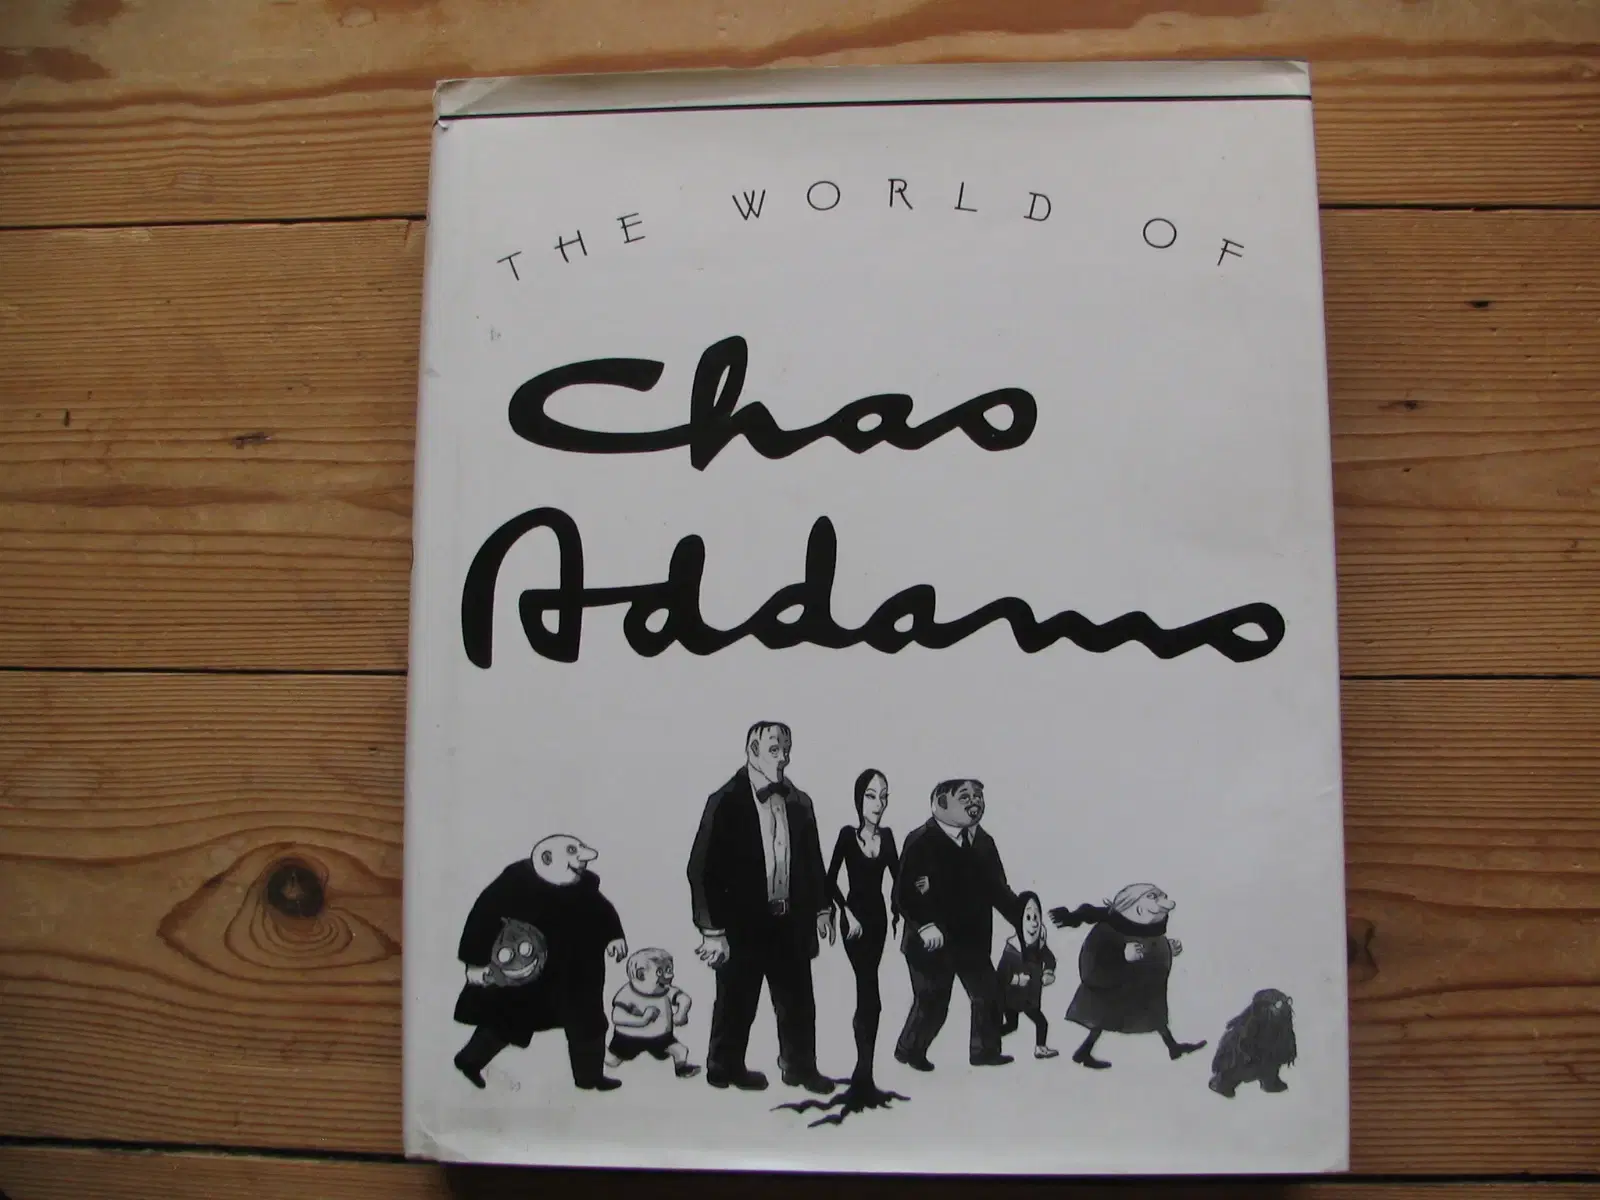 The World of Charles (Chas) Samuel Addams